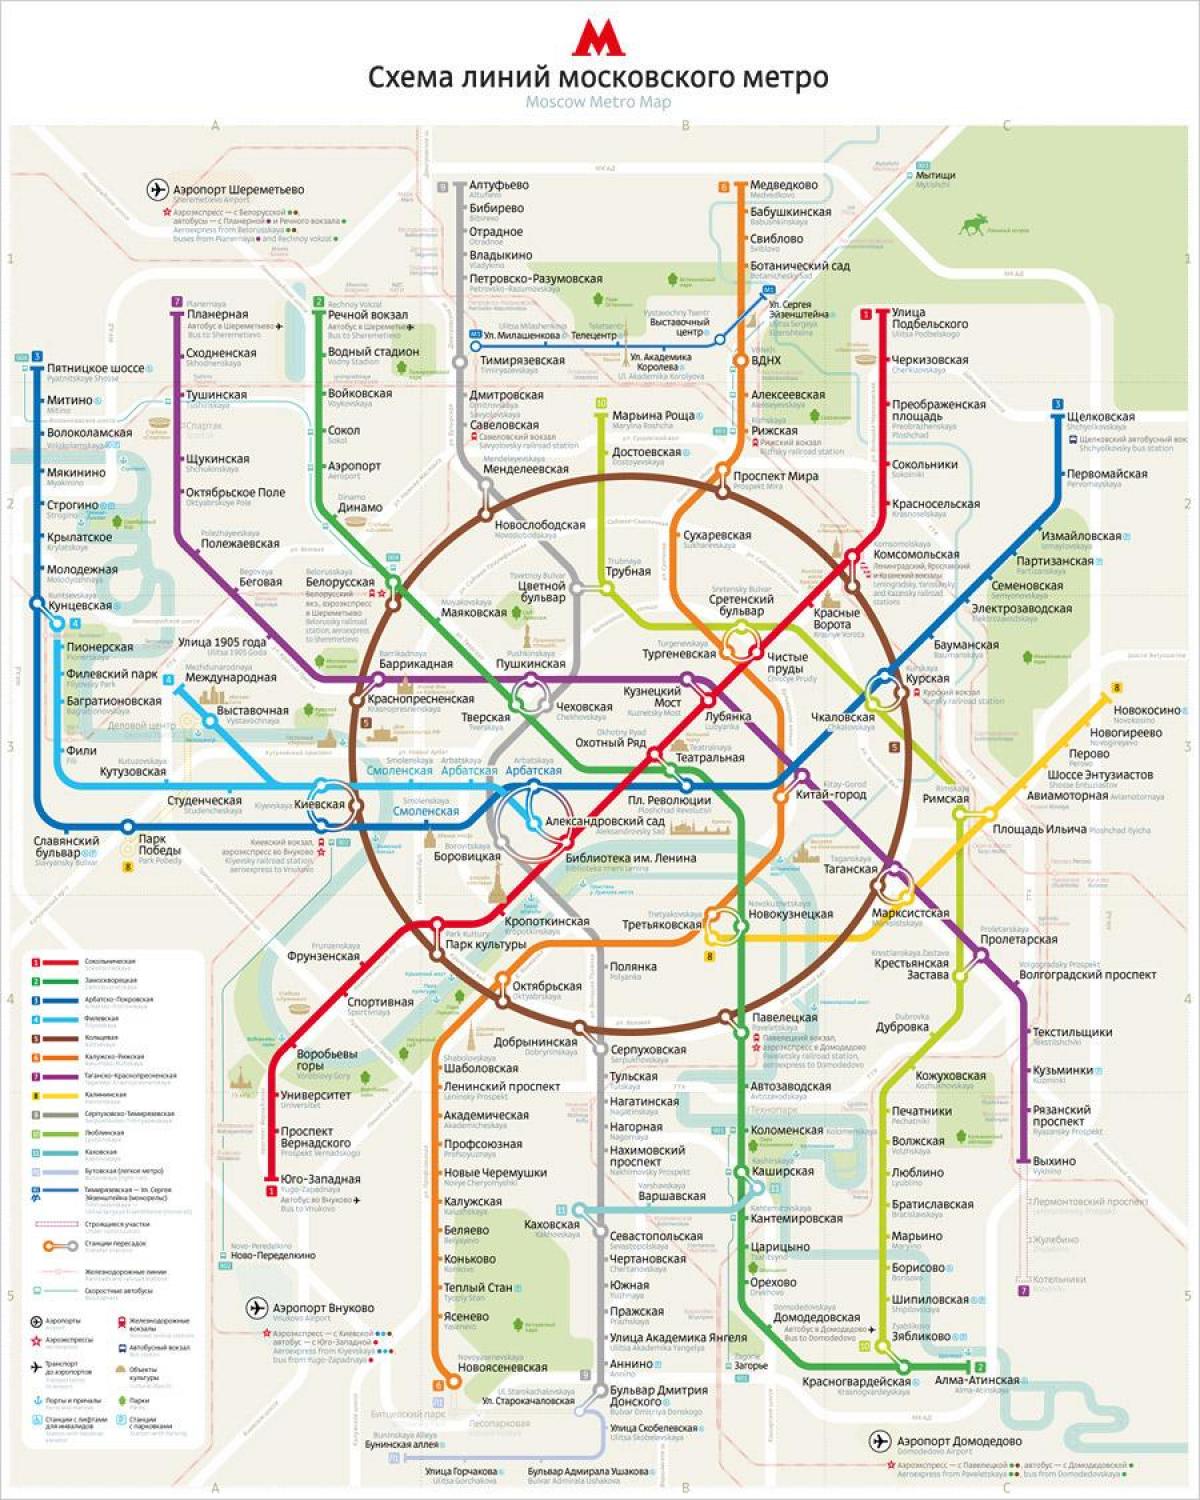 kort over Moskva metro engelsk og russisk